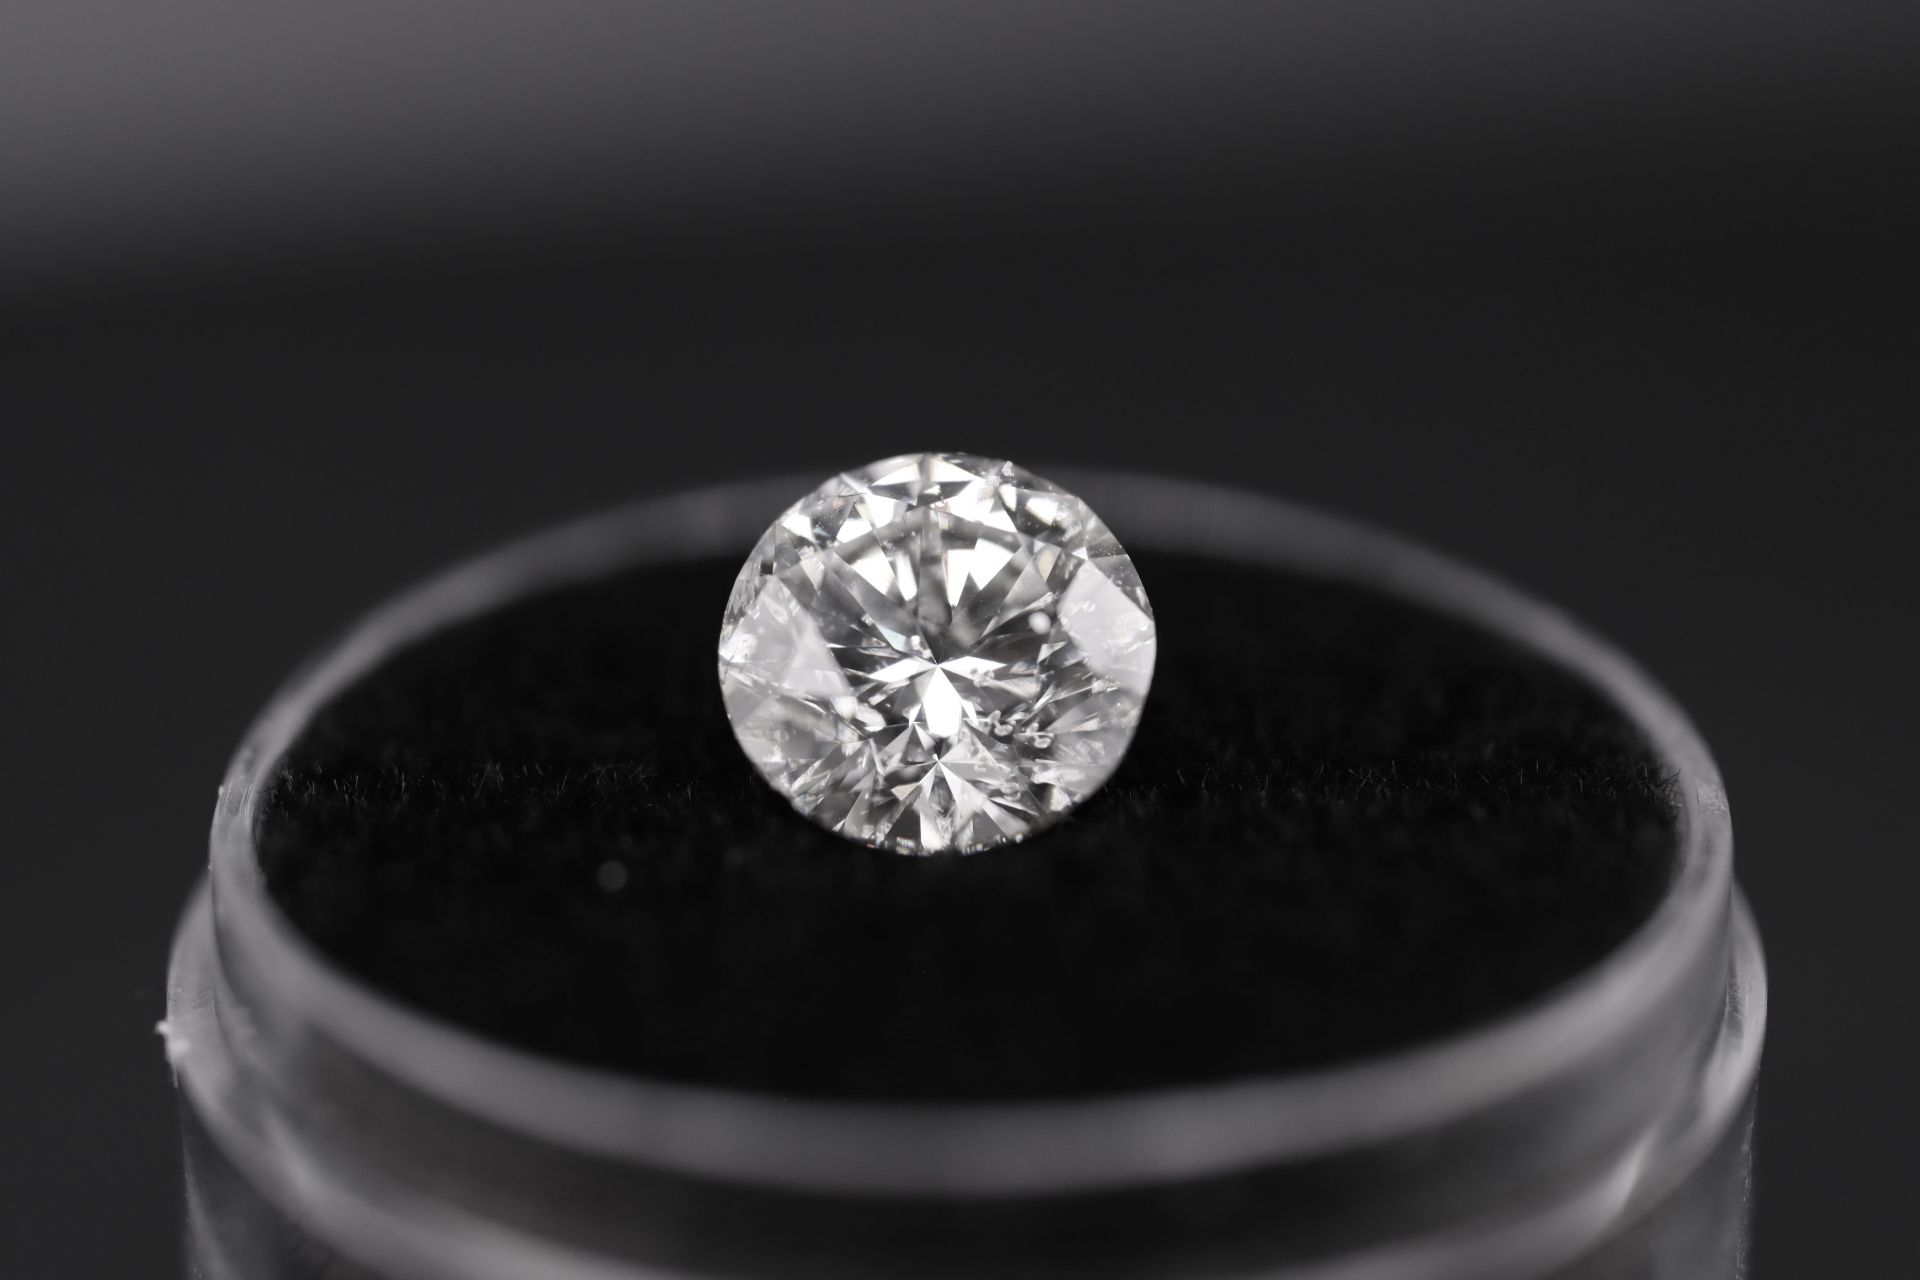 Round Brilliant Cut Natural Diamond 2.01 Carat Colour D Clarity VS1 - DGI Certificate - Image 18 of 24